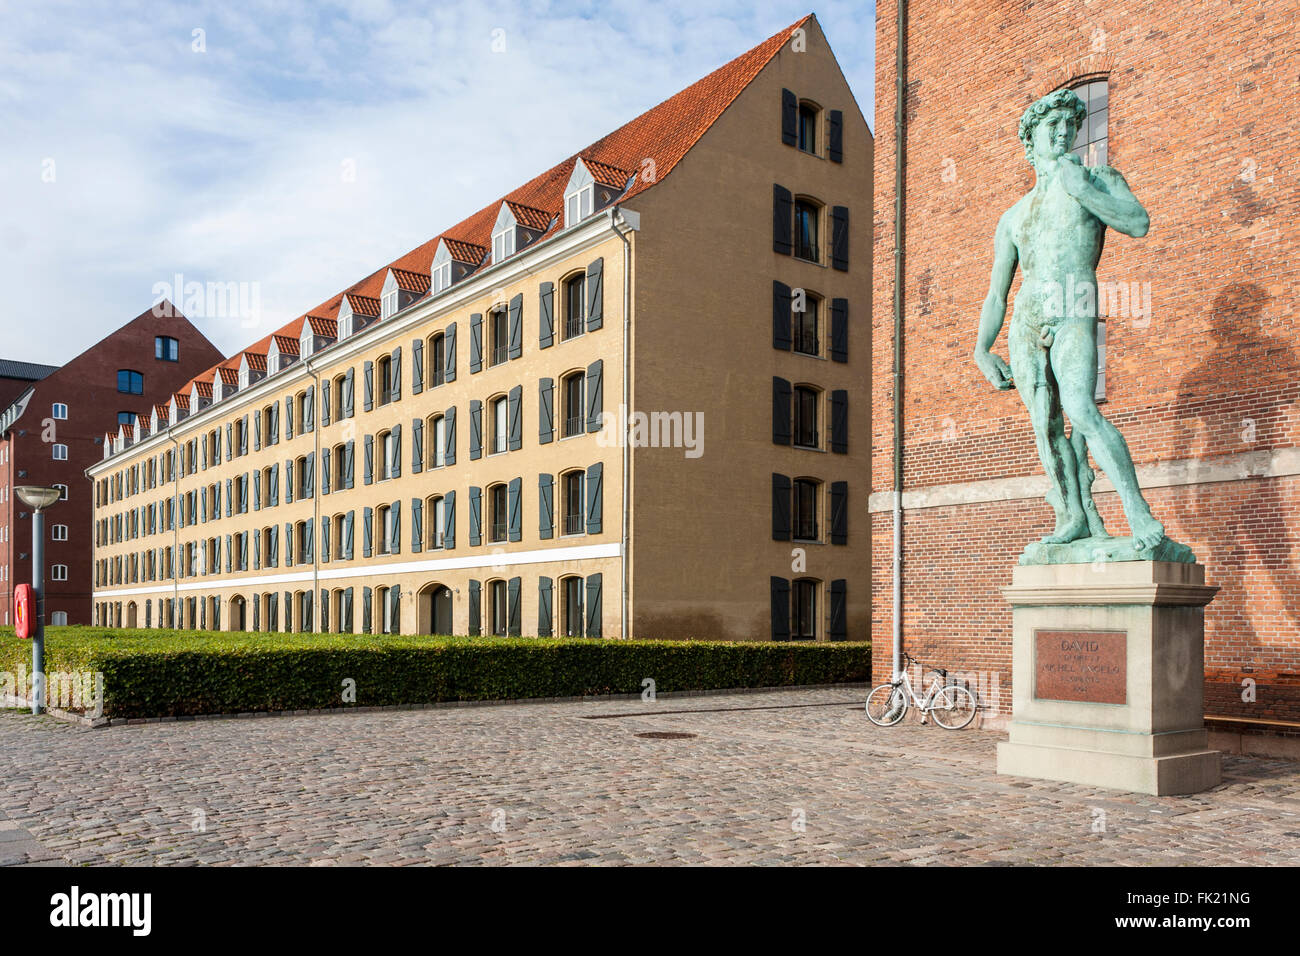 Statue of Michelangelo's David outside Danish Royal Cast Collection building, Langelinie Promenade, Copenhagen, Denmark, Europe. Stock Photo